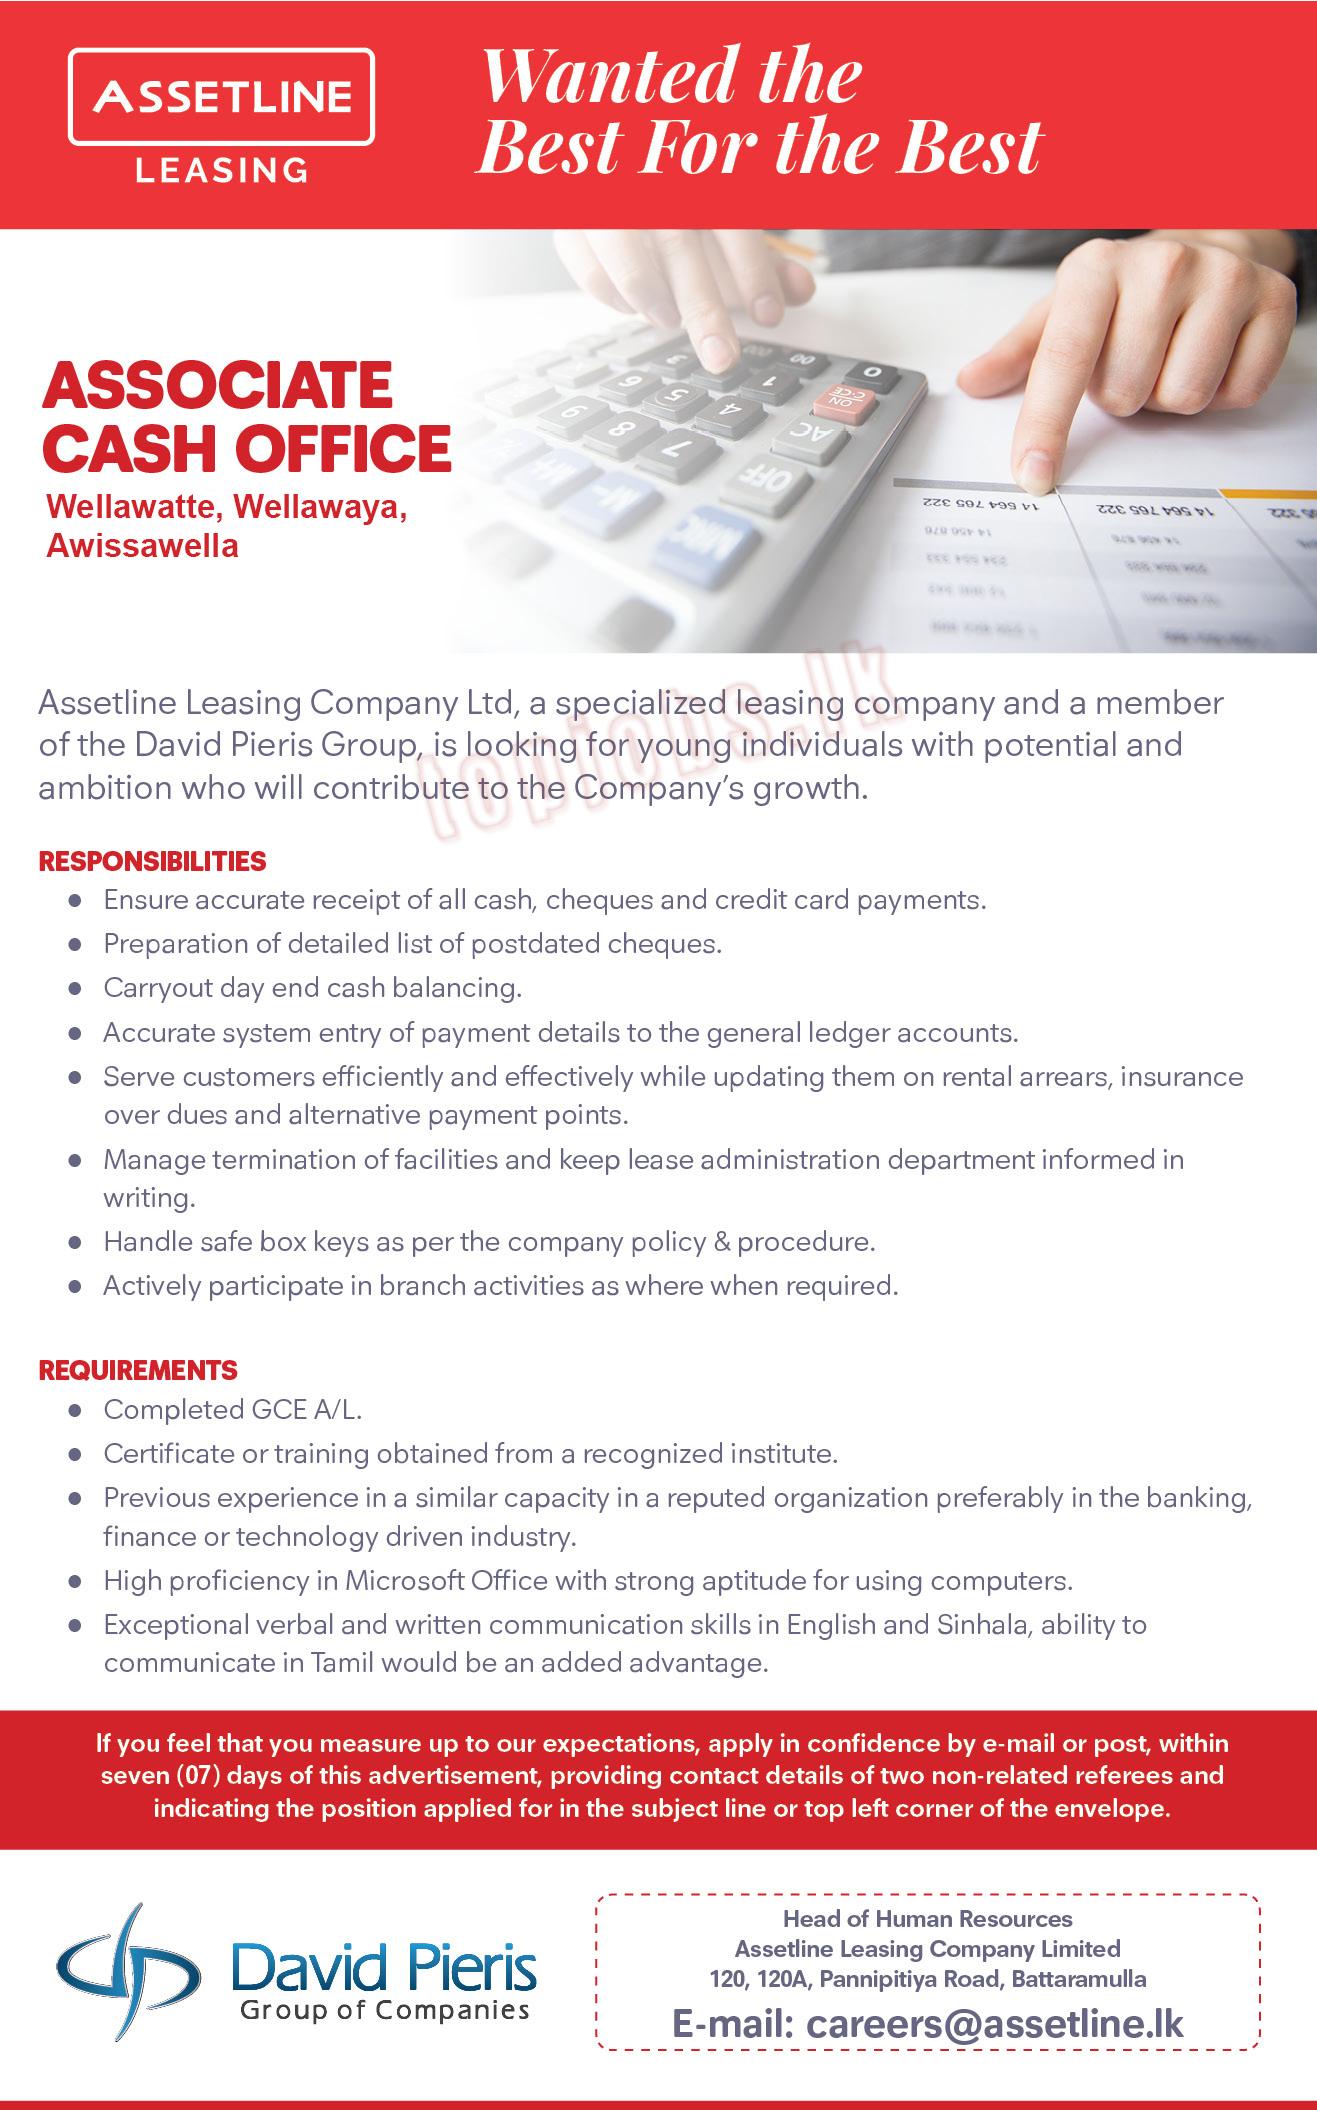 Associate of Cash Office Vacancies in DPMC Assetline Holdings